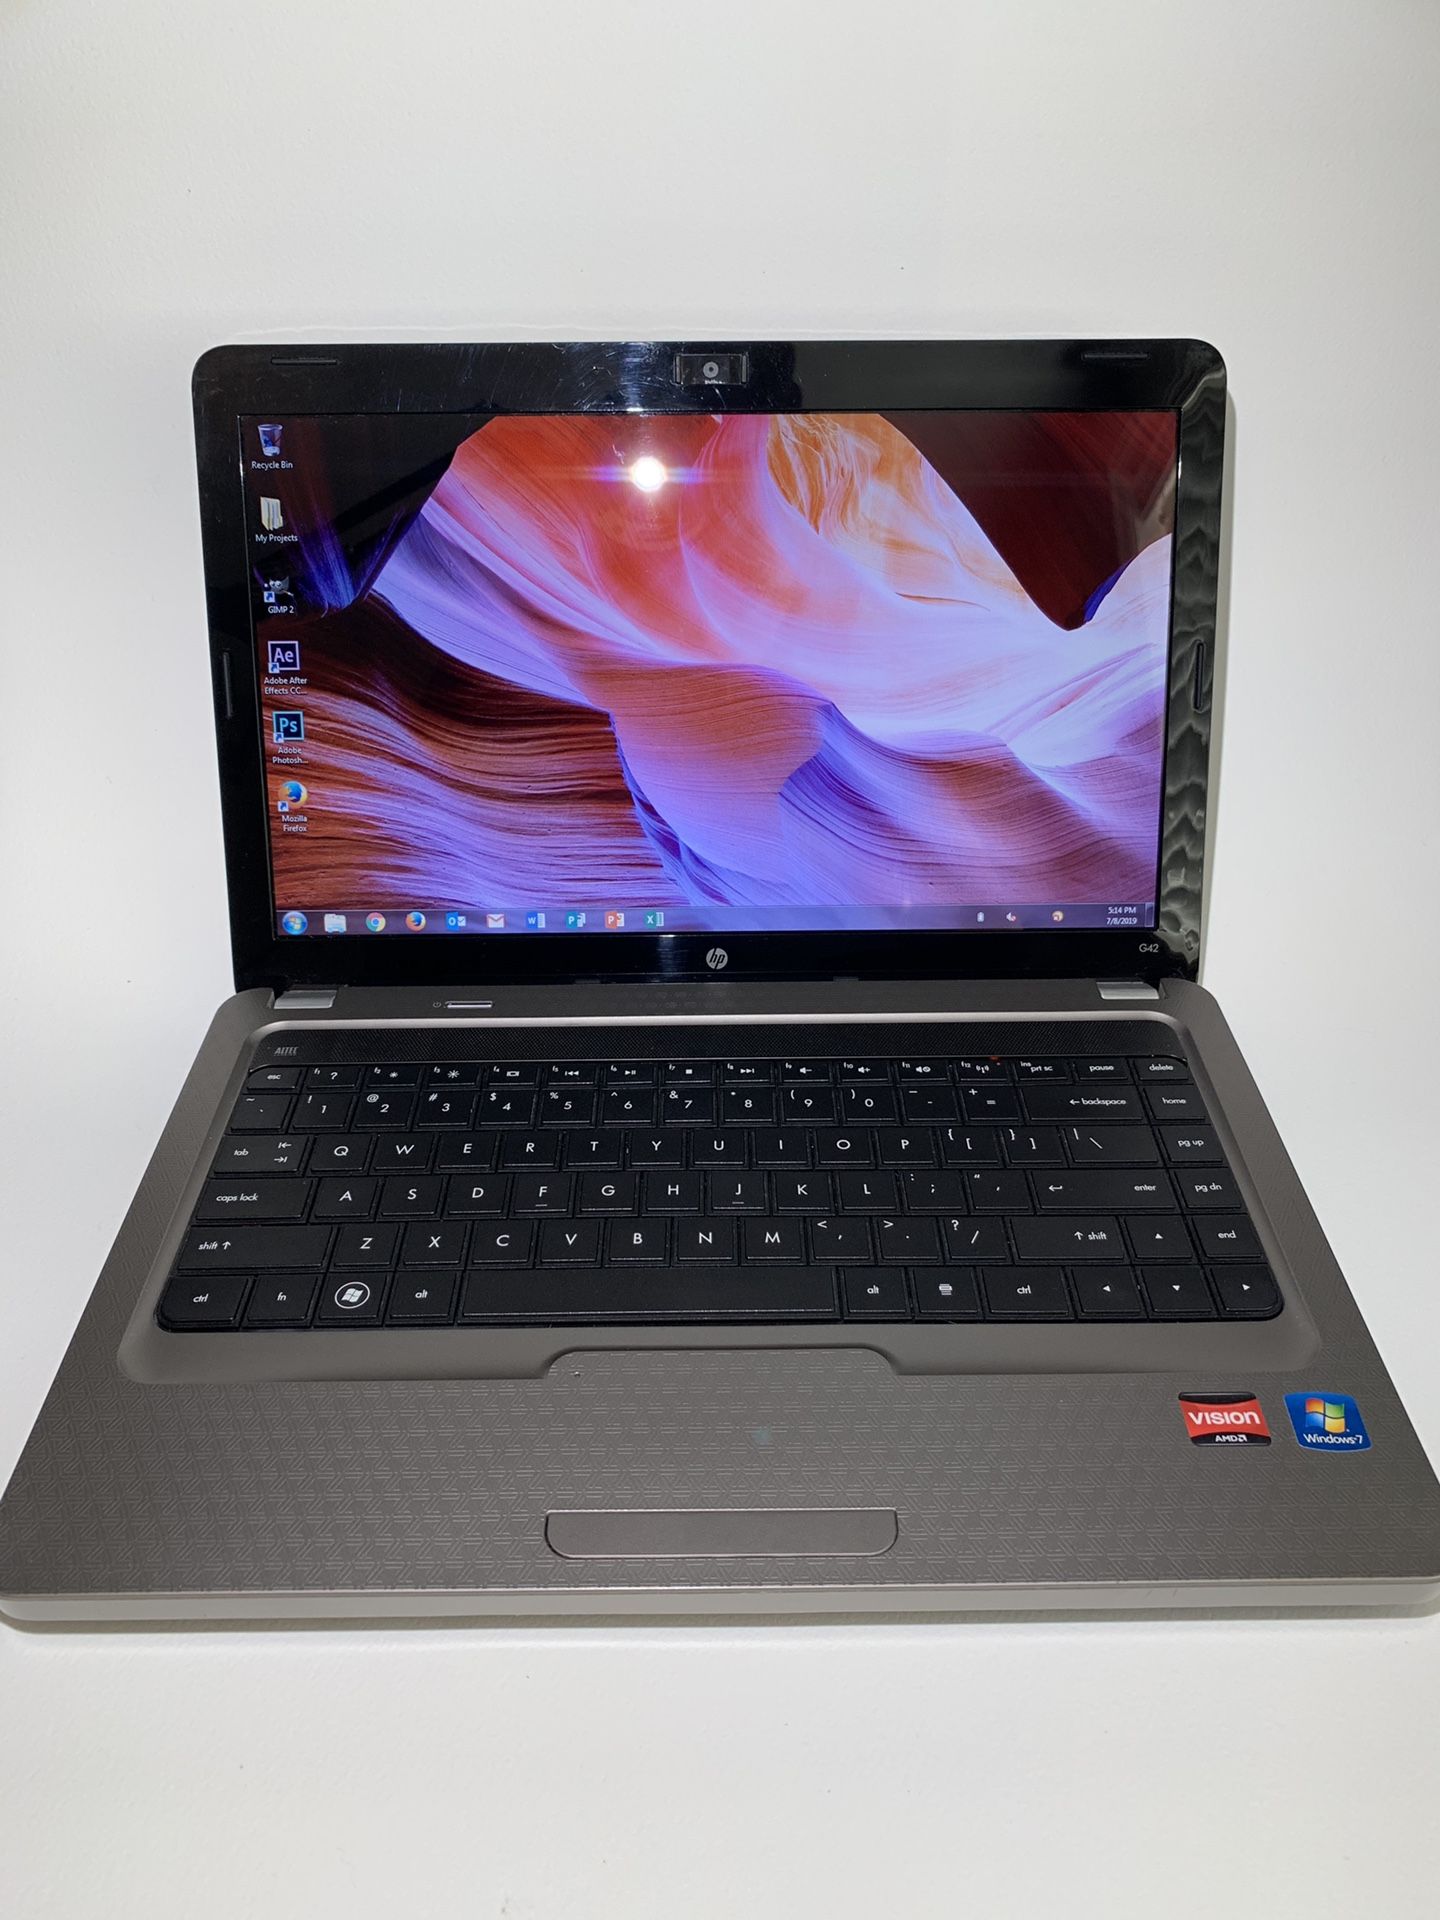 HP G42-415DX Notebook PC